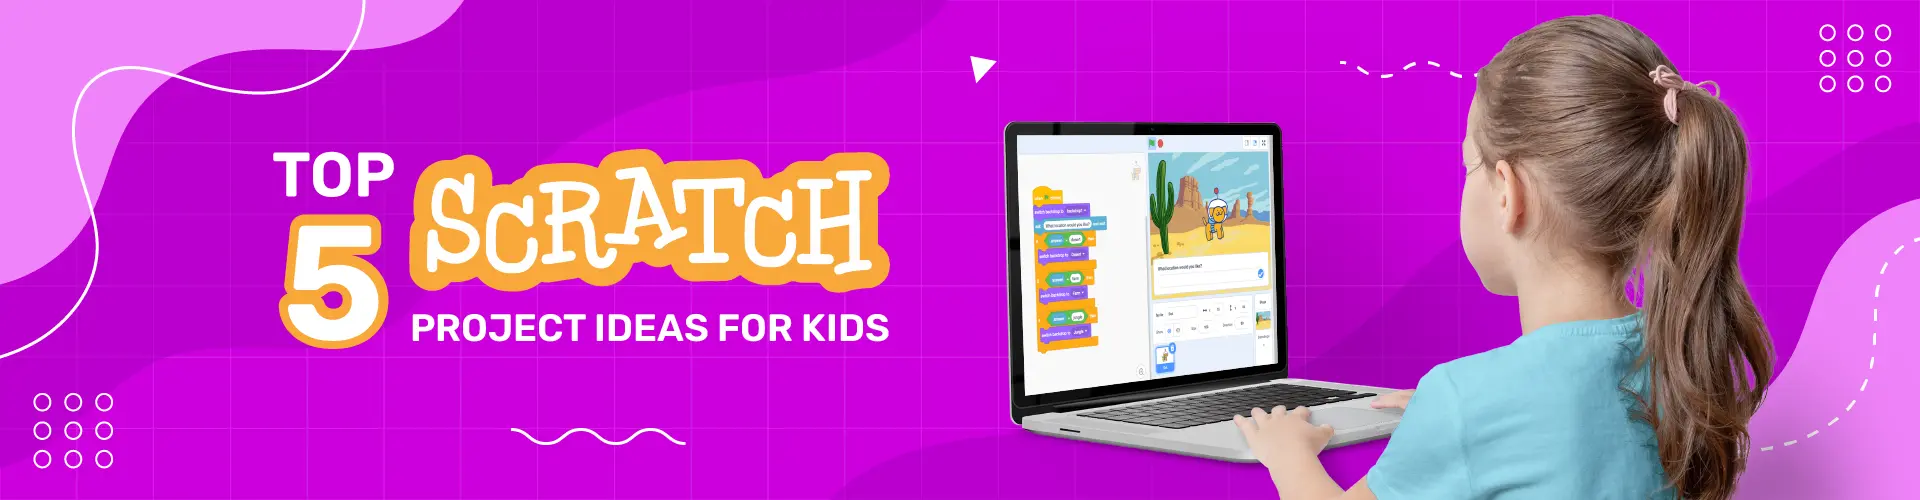 Scratch Project Ideas For Kids